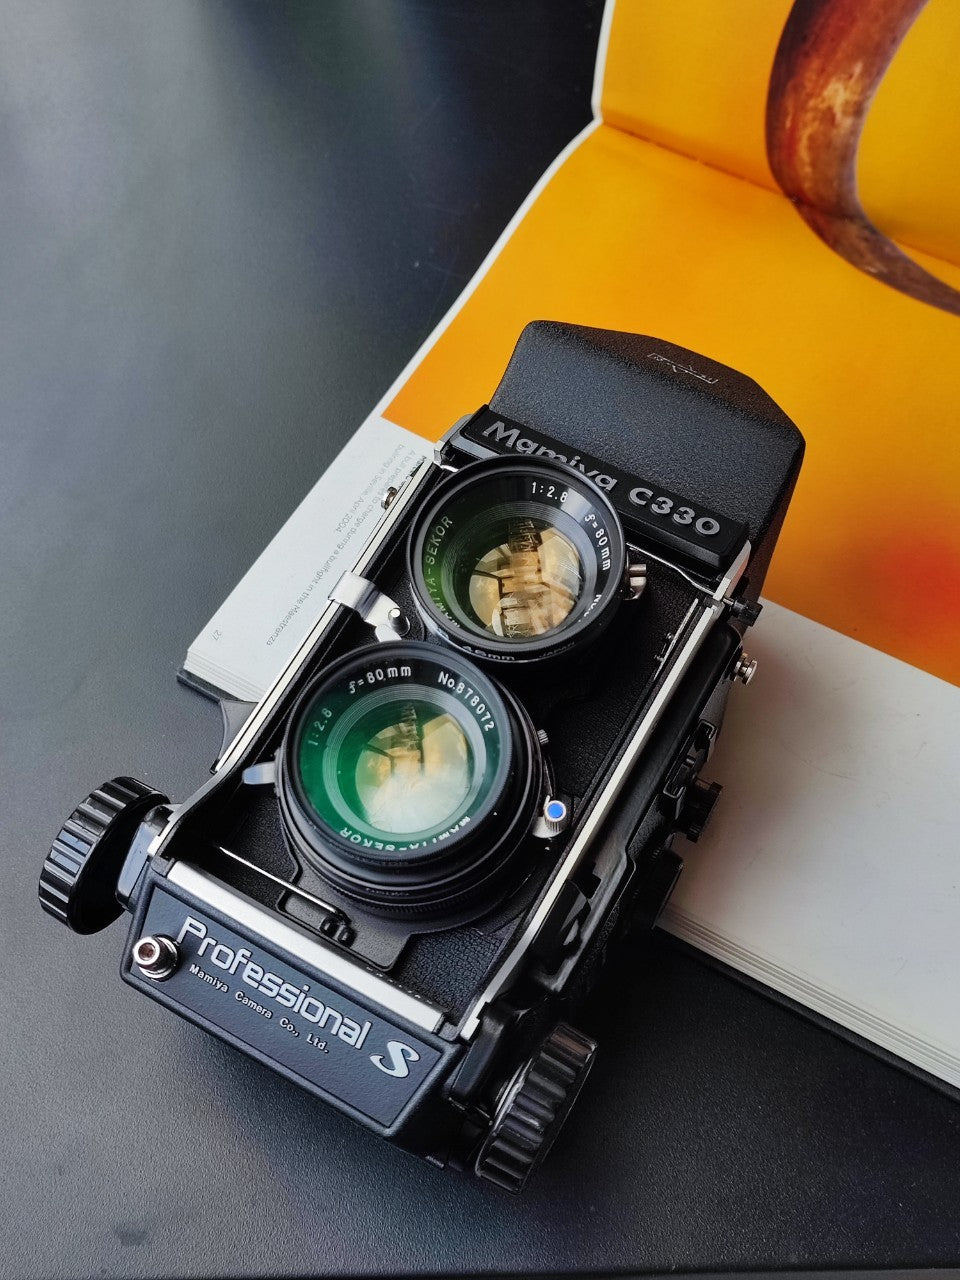 Mamiya C330 Professional S with Lens